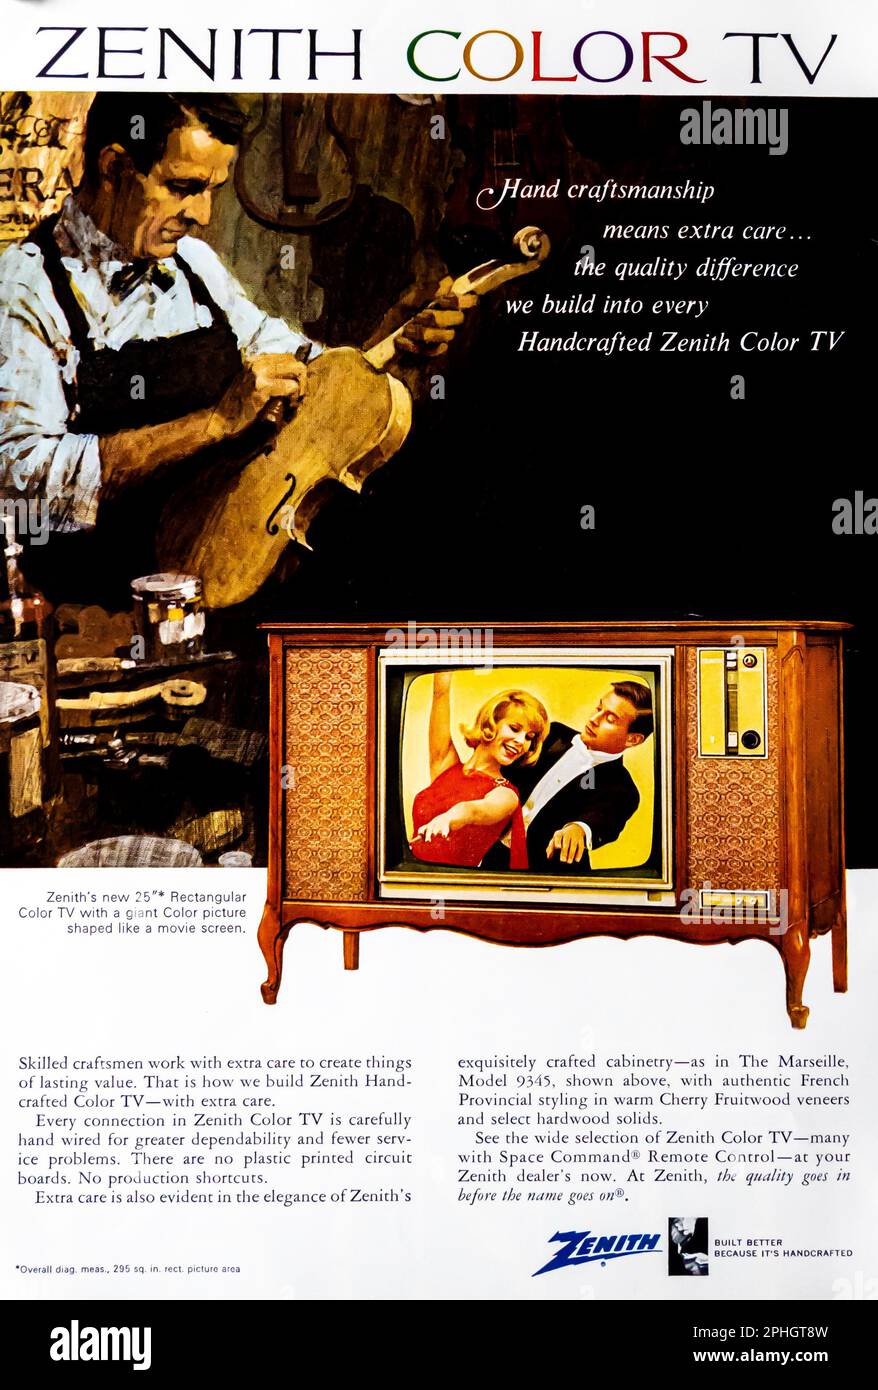 Zenith Color TV spot in una rivista NatGeo, aprile 1966 Foto Stock